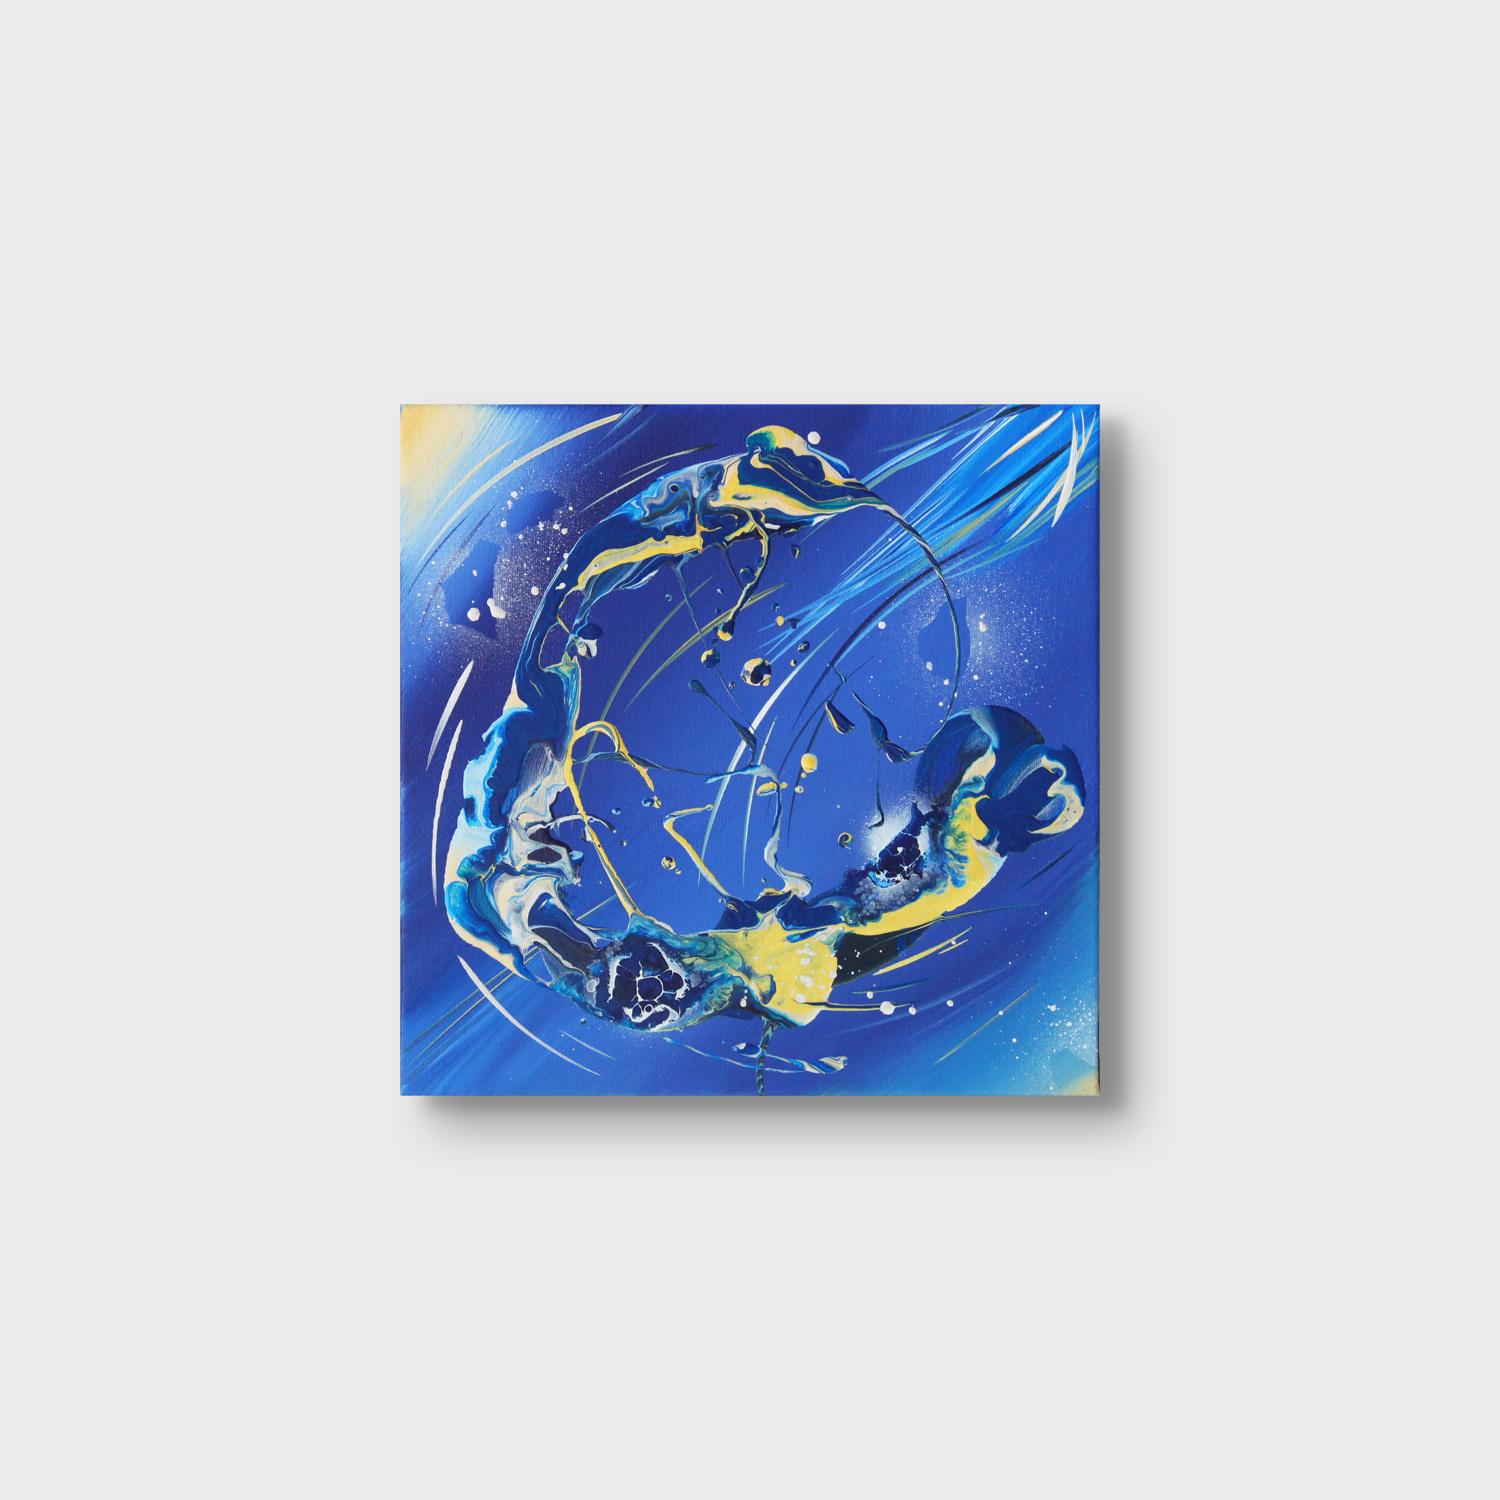 Peinture expressionniste abstraite « Van Gogh's Shooting Stars 7 » - Painting de Michael Carini